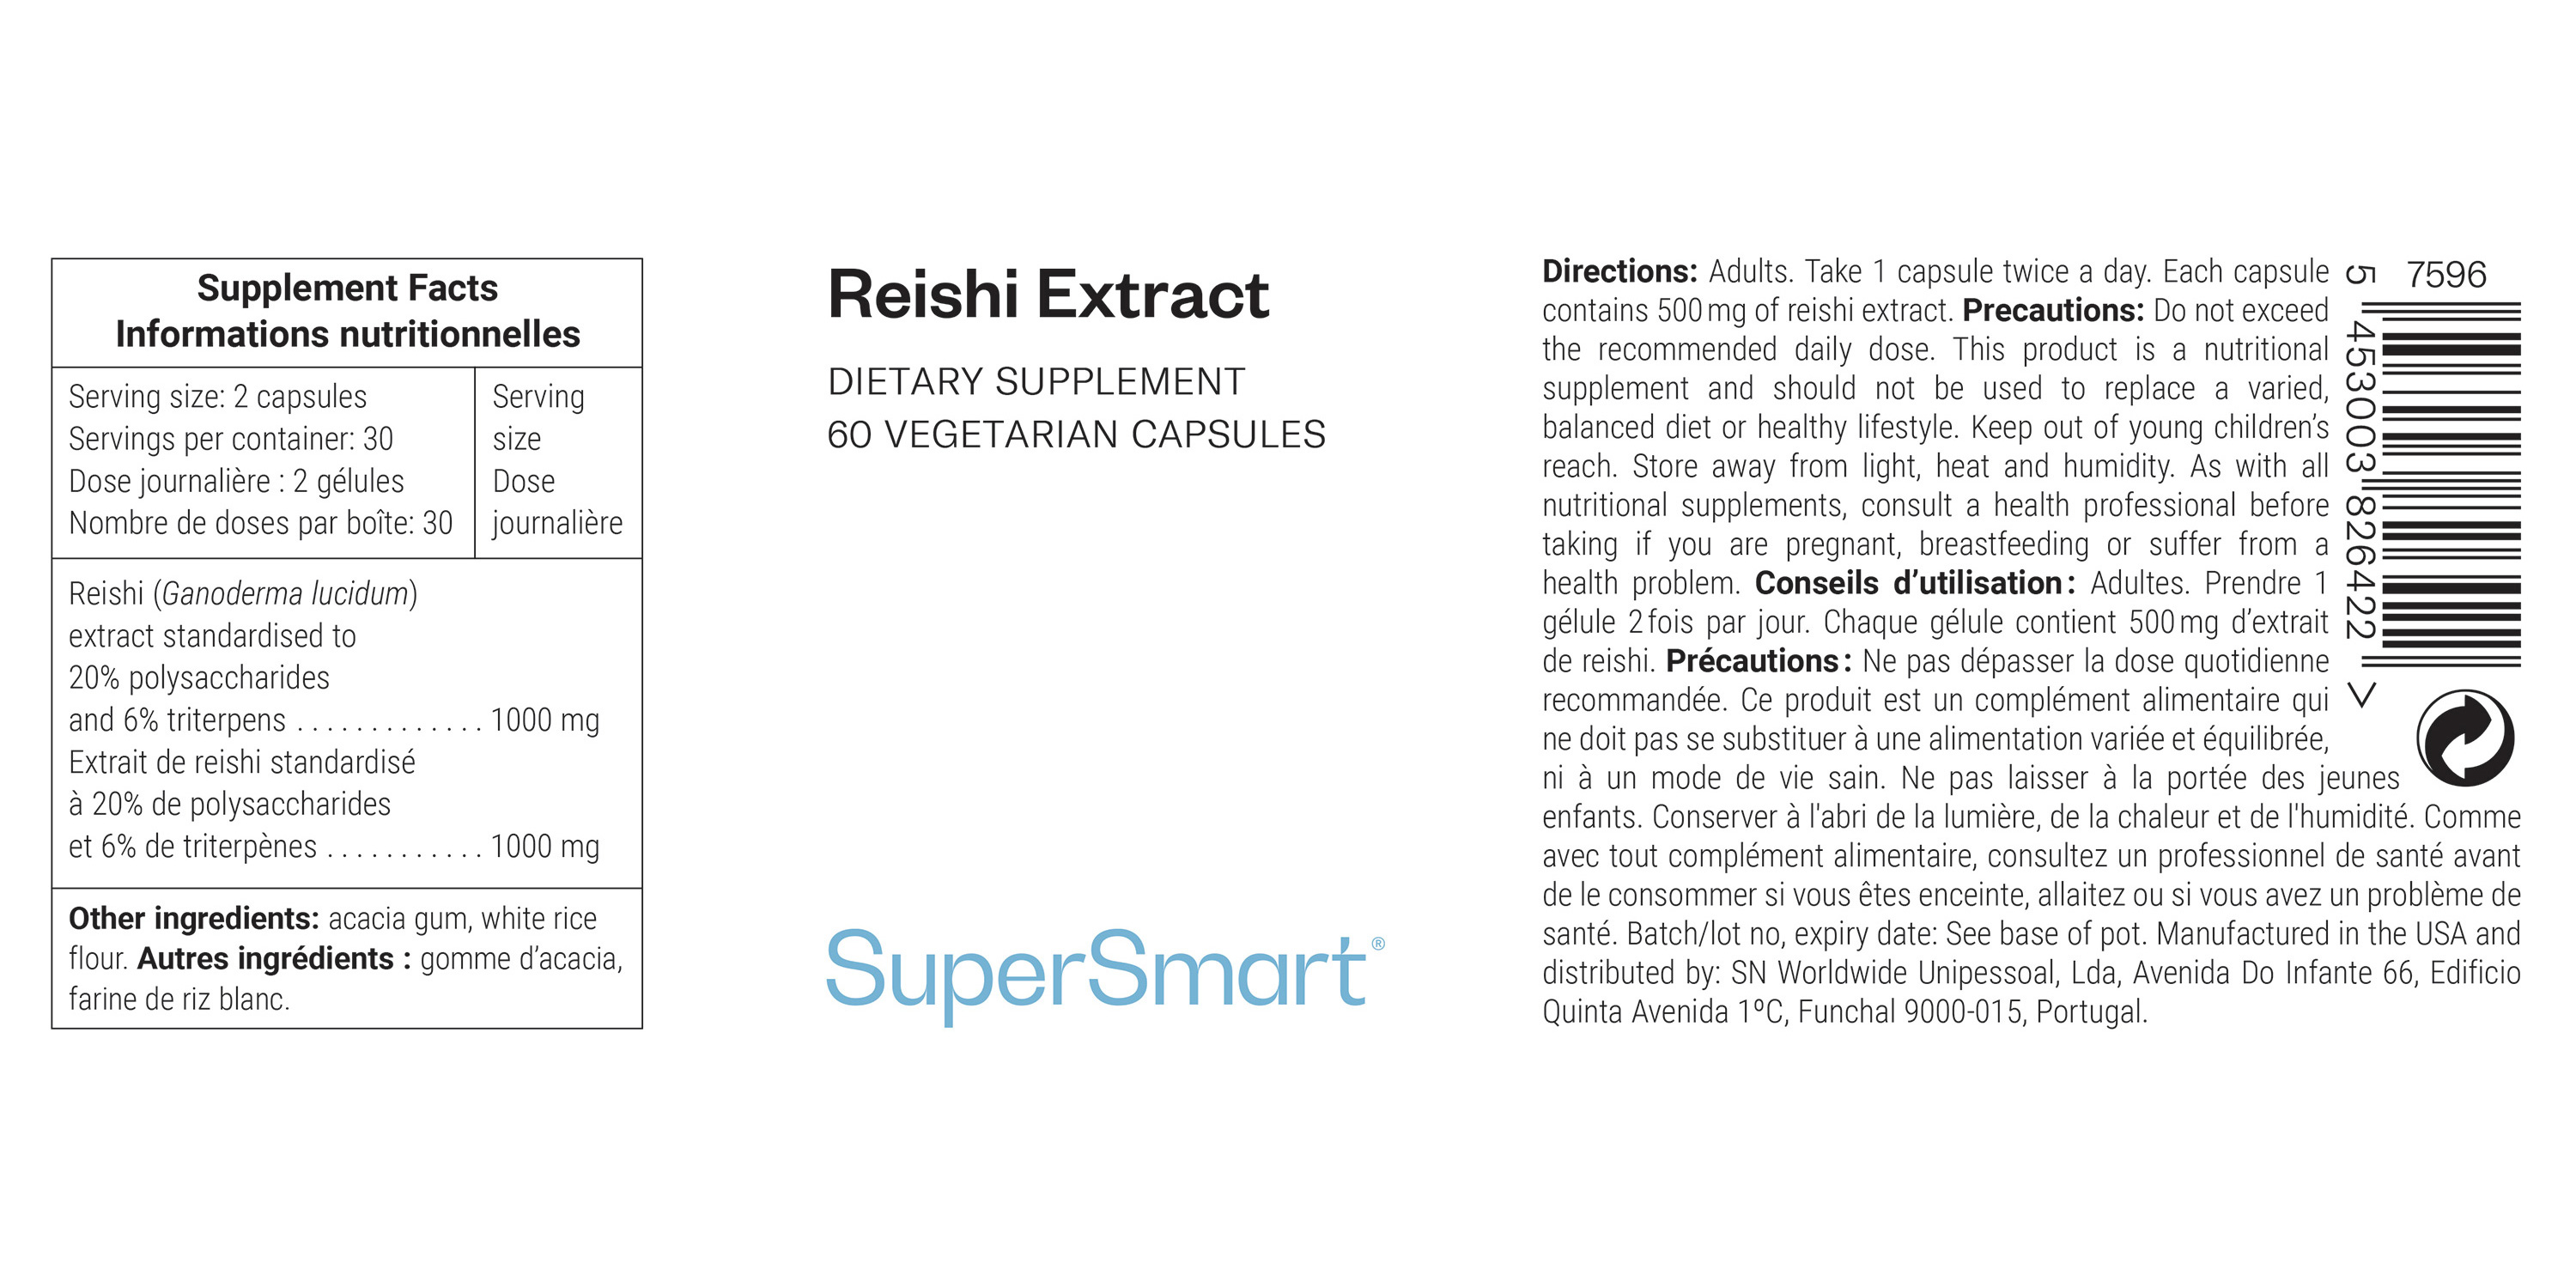 Reishi Extract Supplement 